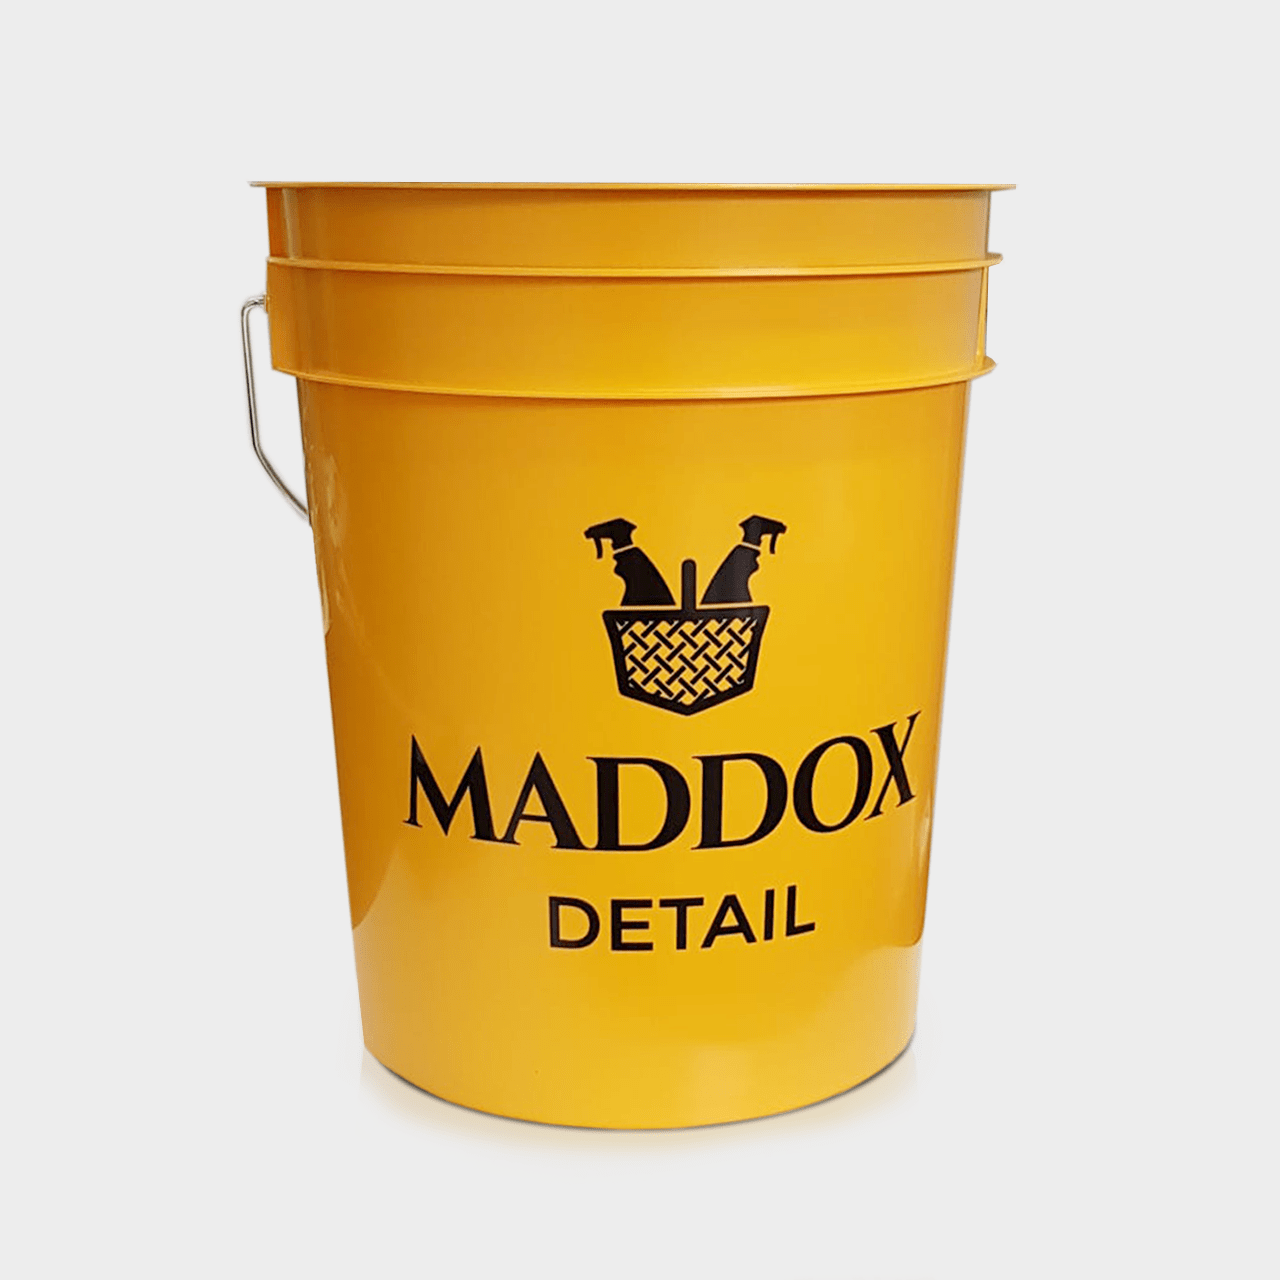 Kit de Lavado MADDOX DETAIL Profissional Car Wash Bucket Kit